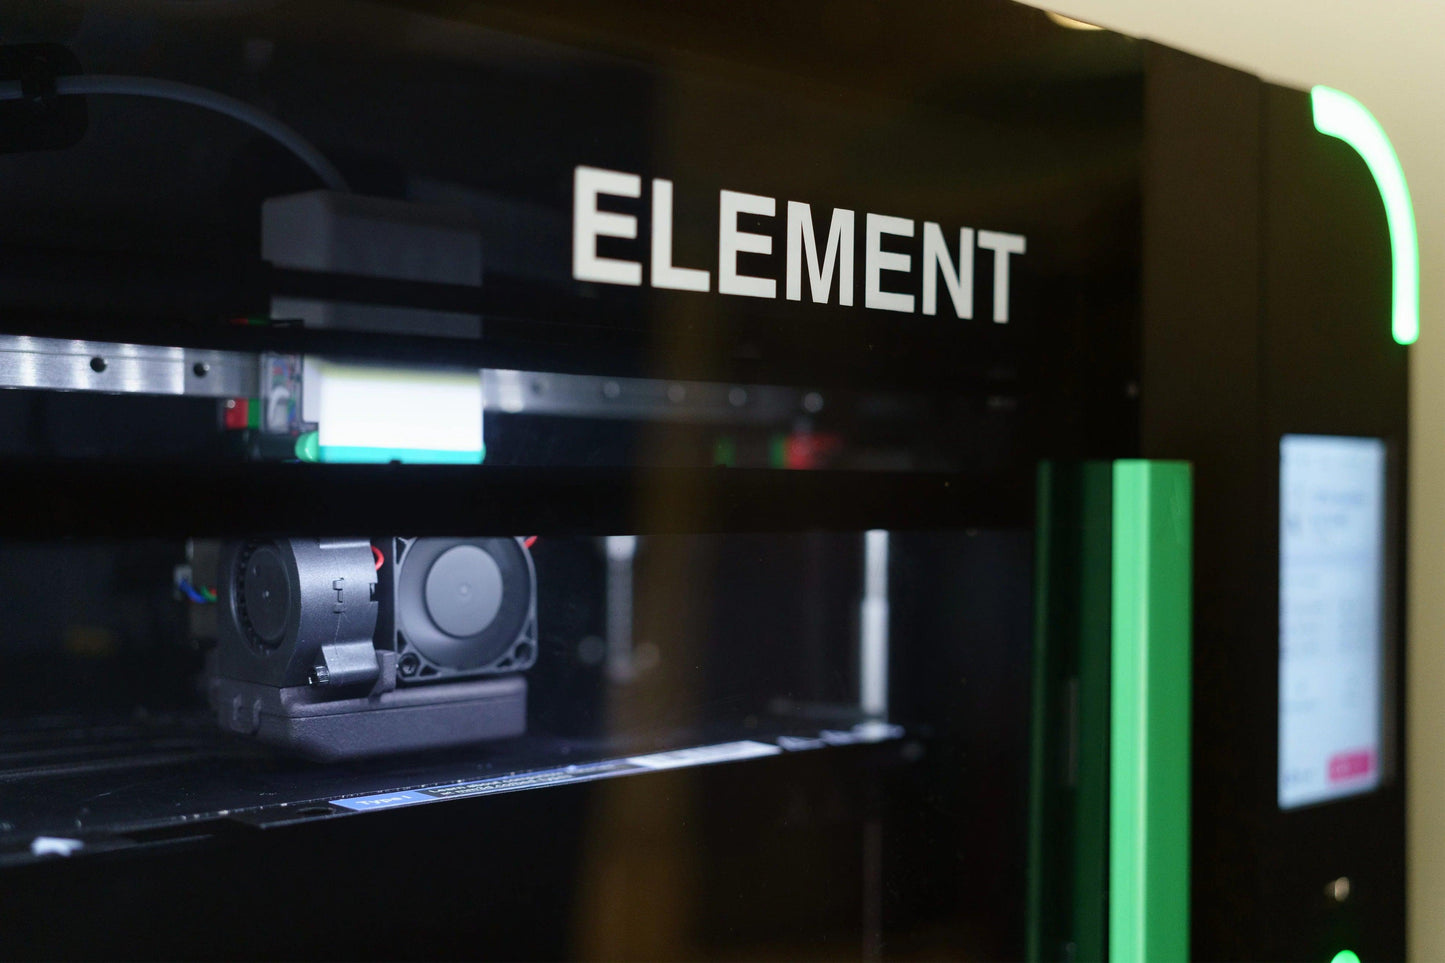 Mosaic Element - 3Digital | Droni e Stampanti 3D